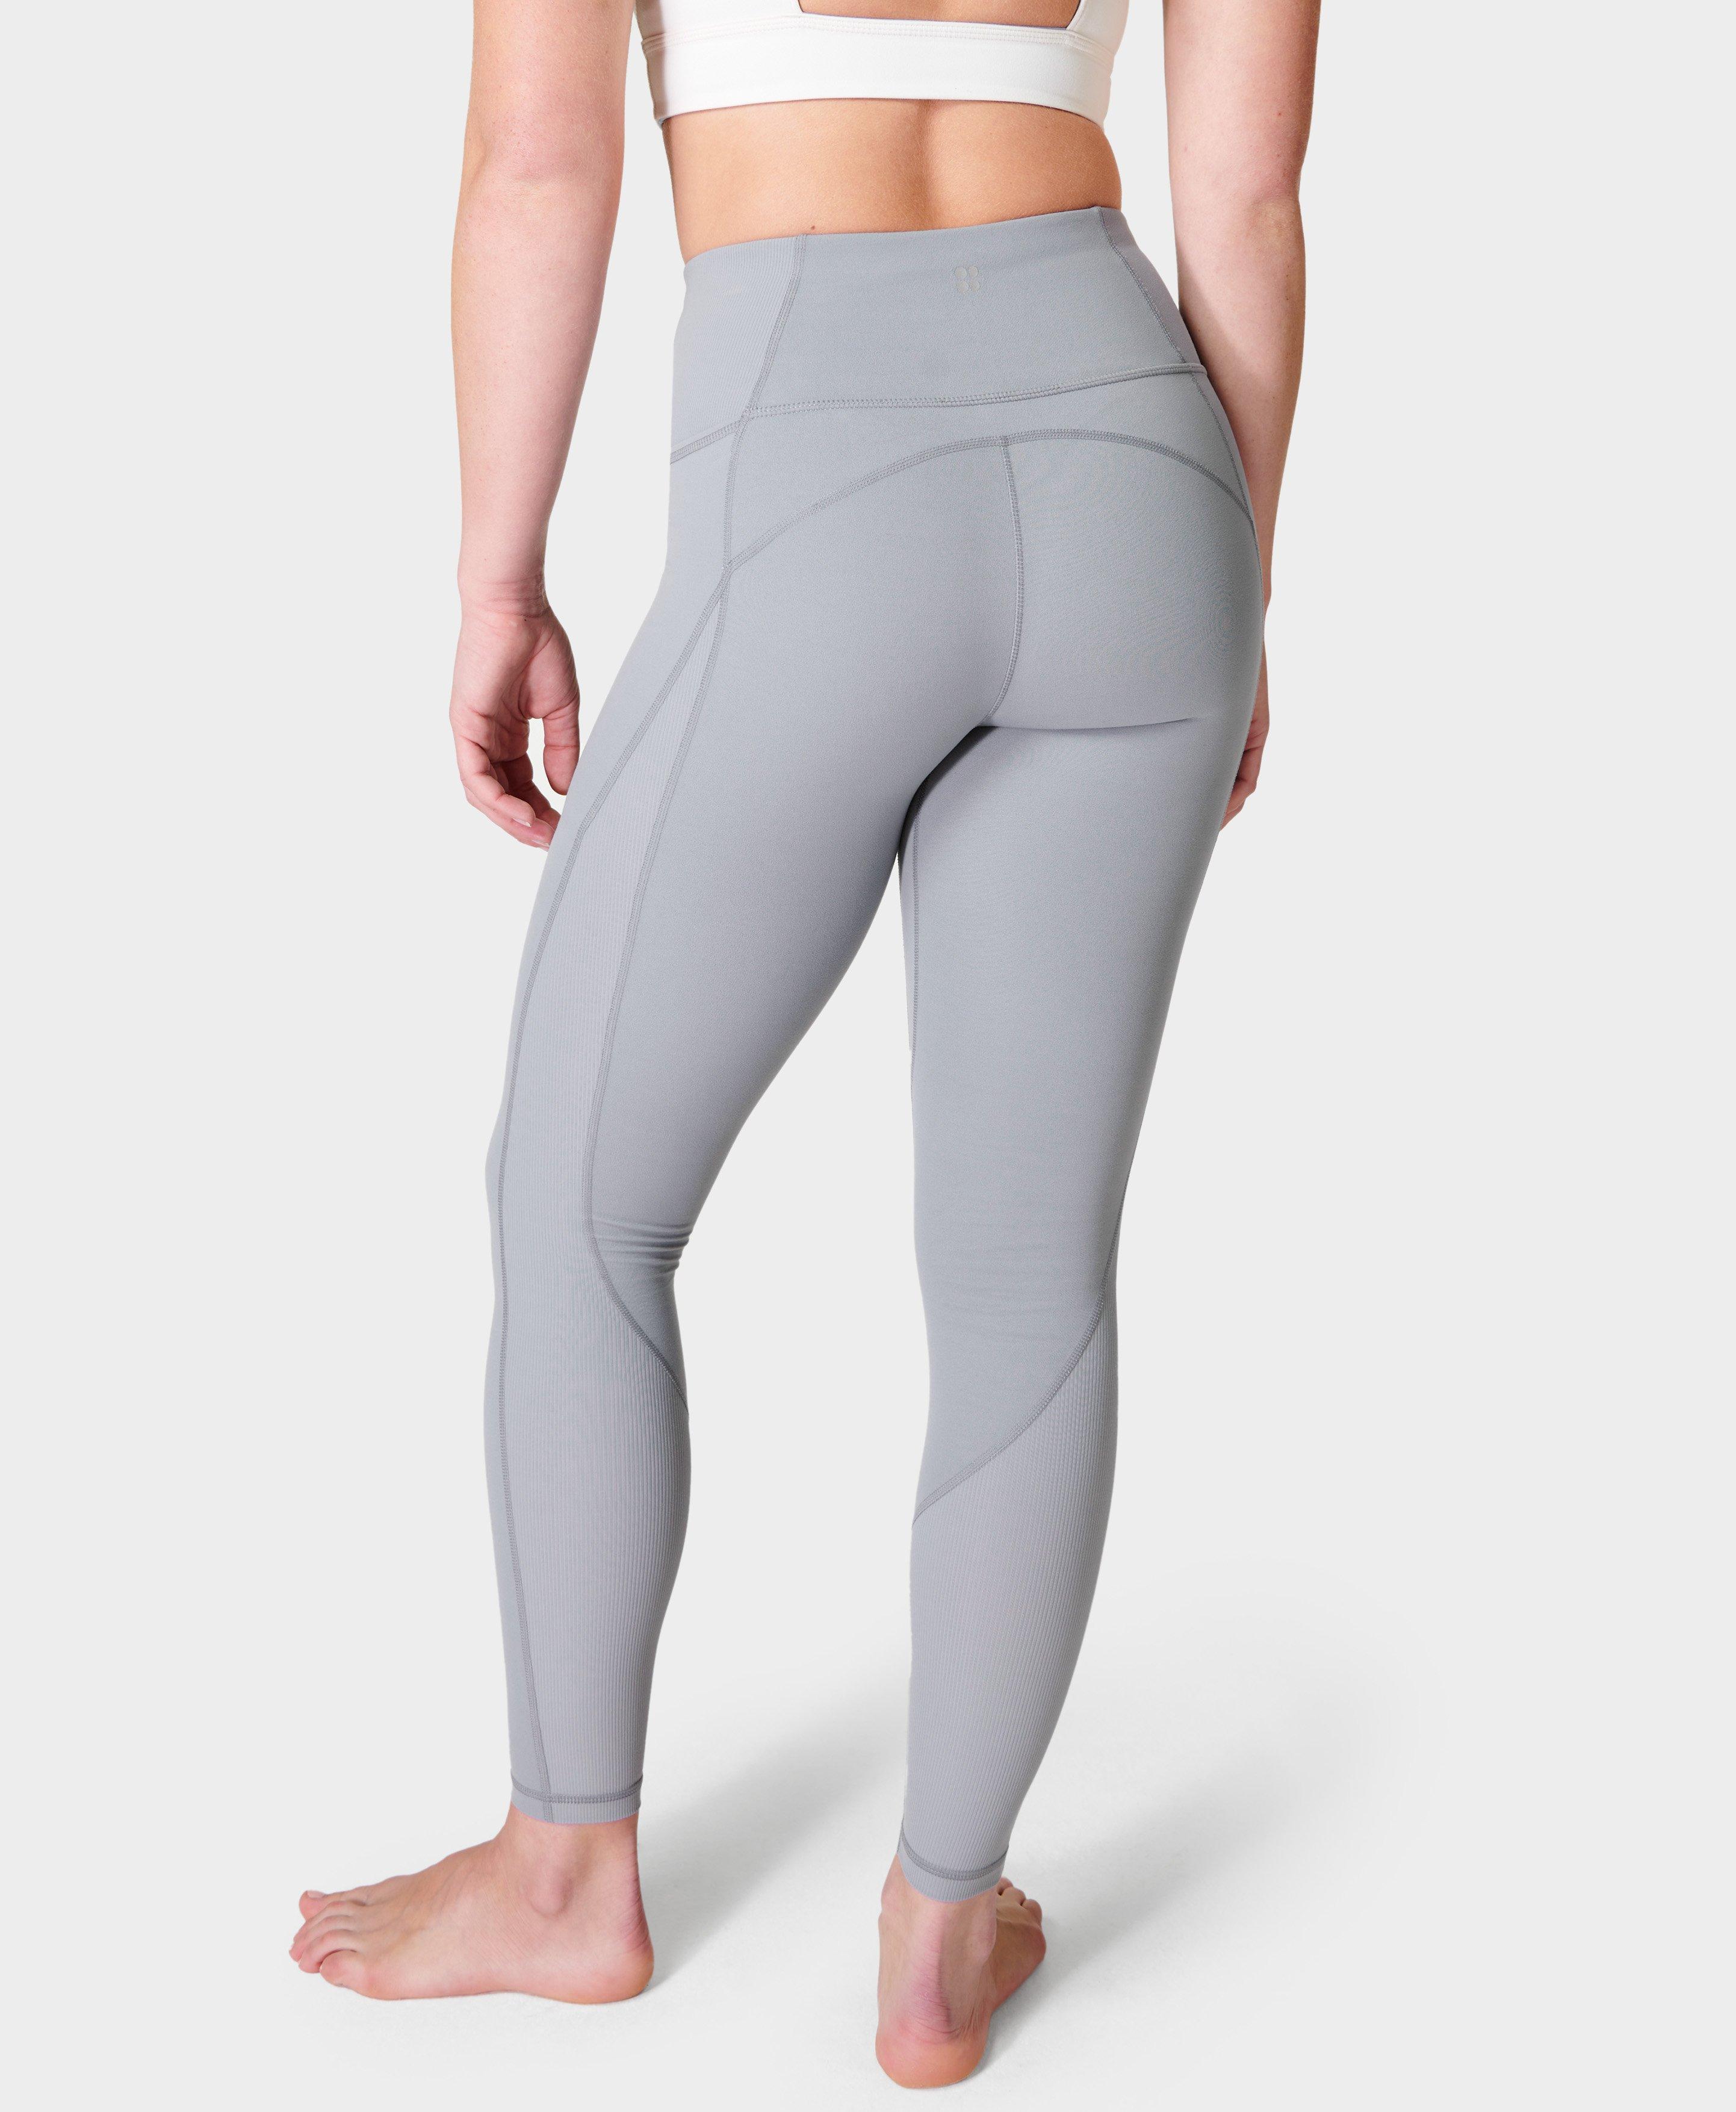 Super Soft Ribbed Yoga Leggings - Neutral Flow Grey, Women's Leggings